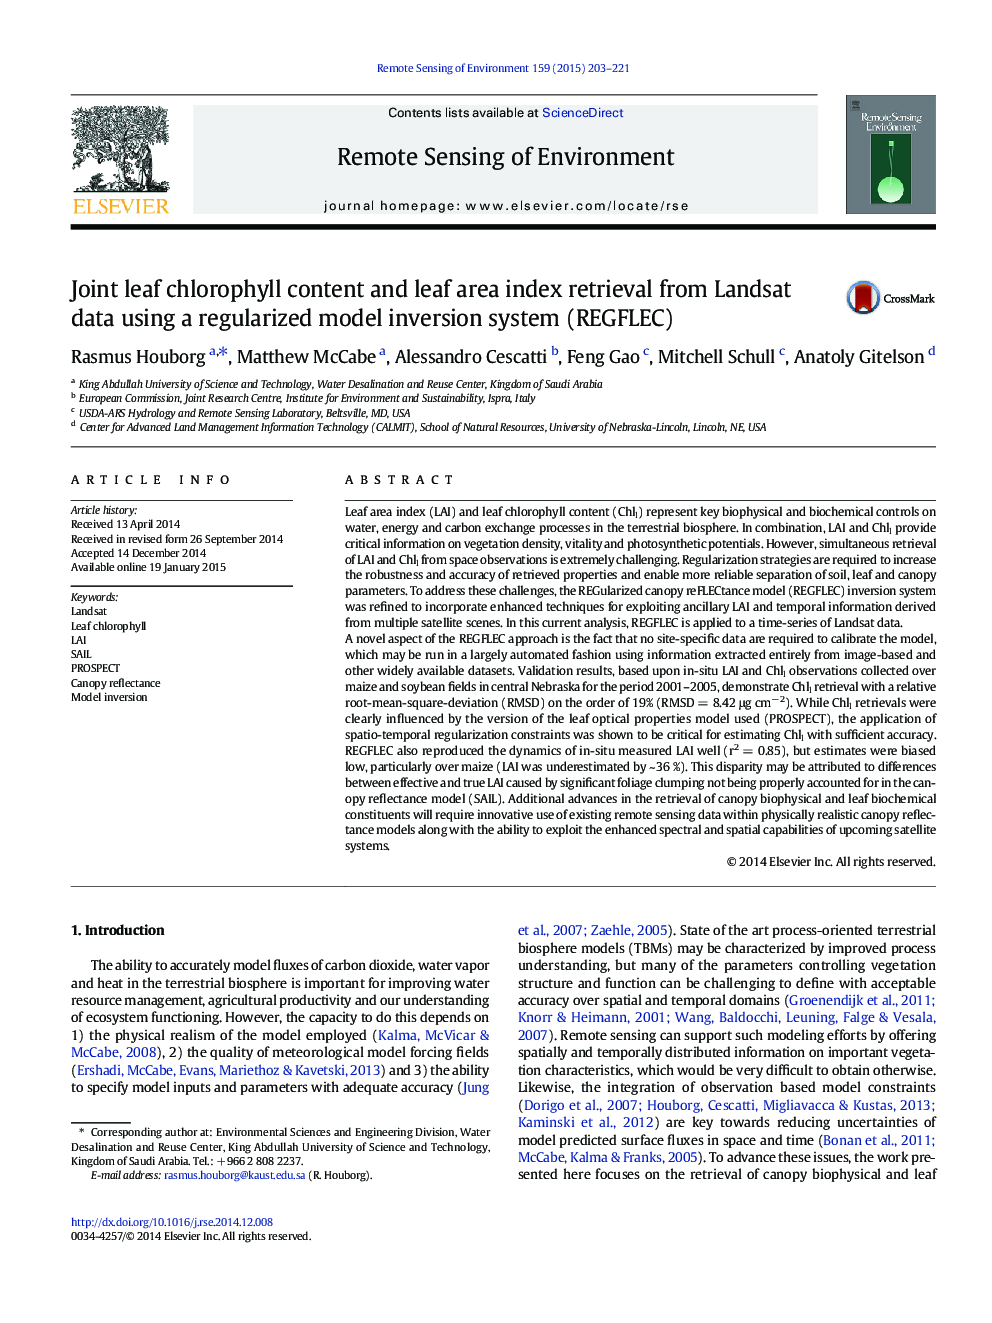 Joint leaf chlorophyll content and leaf area index retrieval from Landsat data using a regularized model inversion system (REGFLEC)